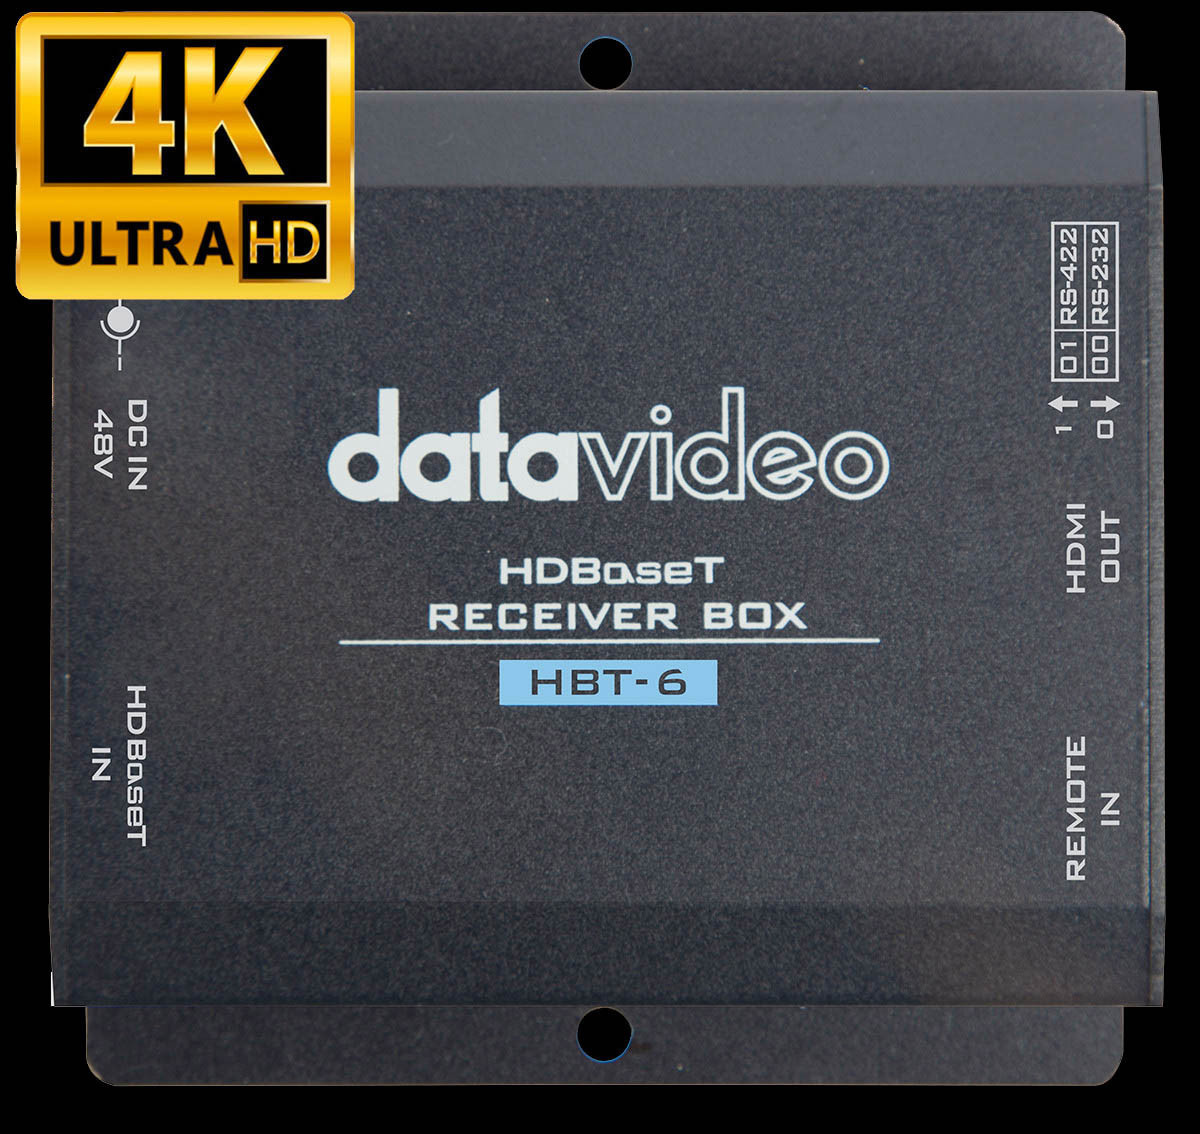 HDBaseT Receiver Box HBT-6